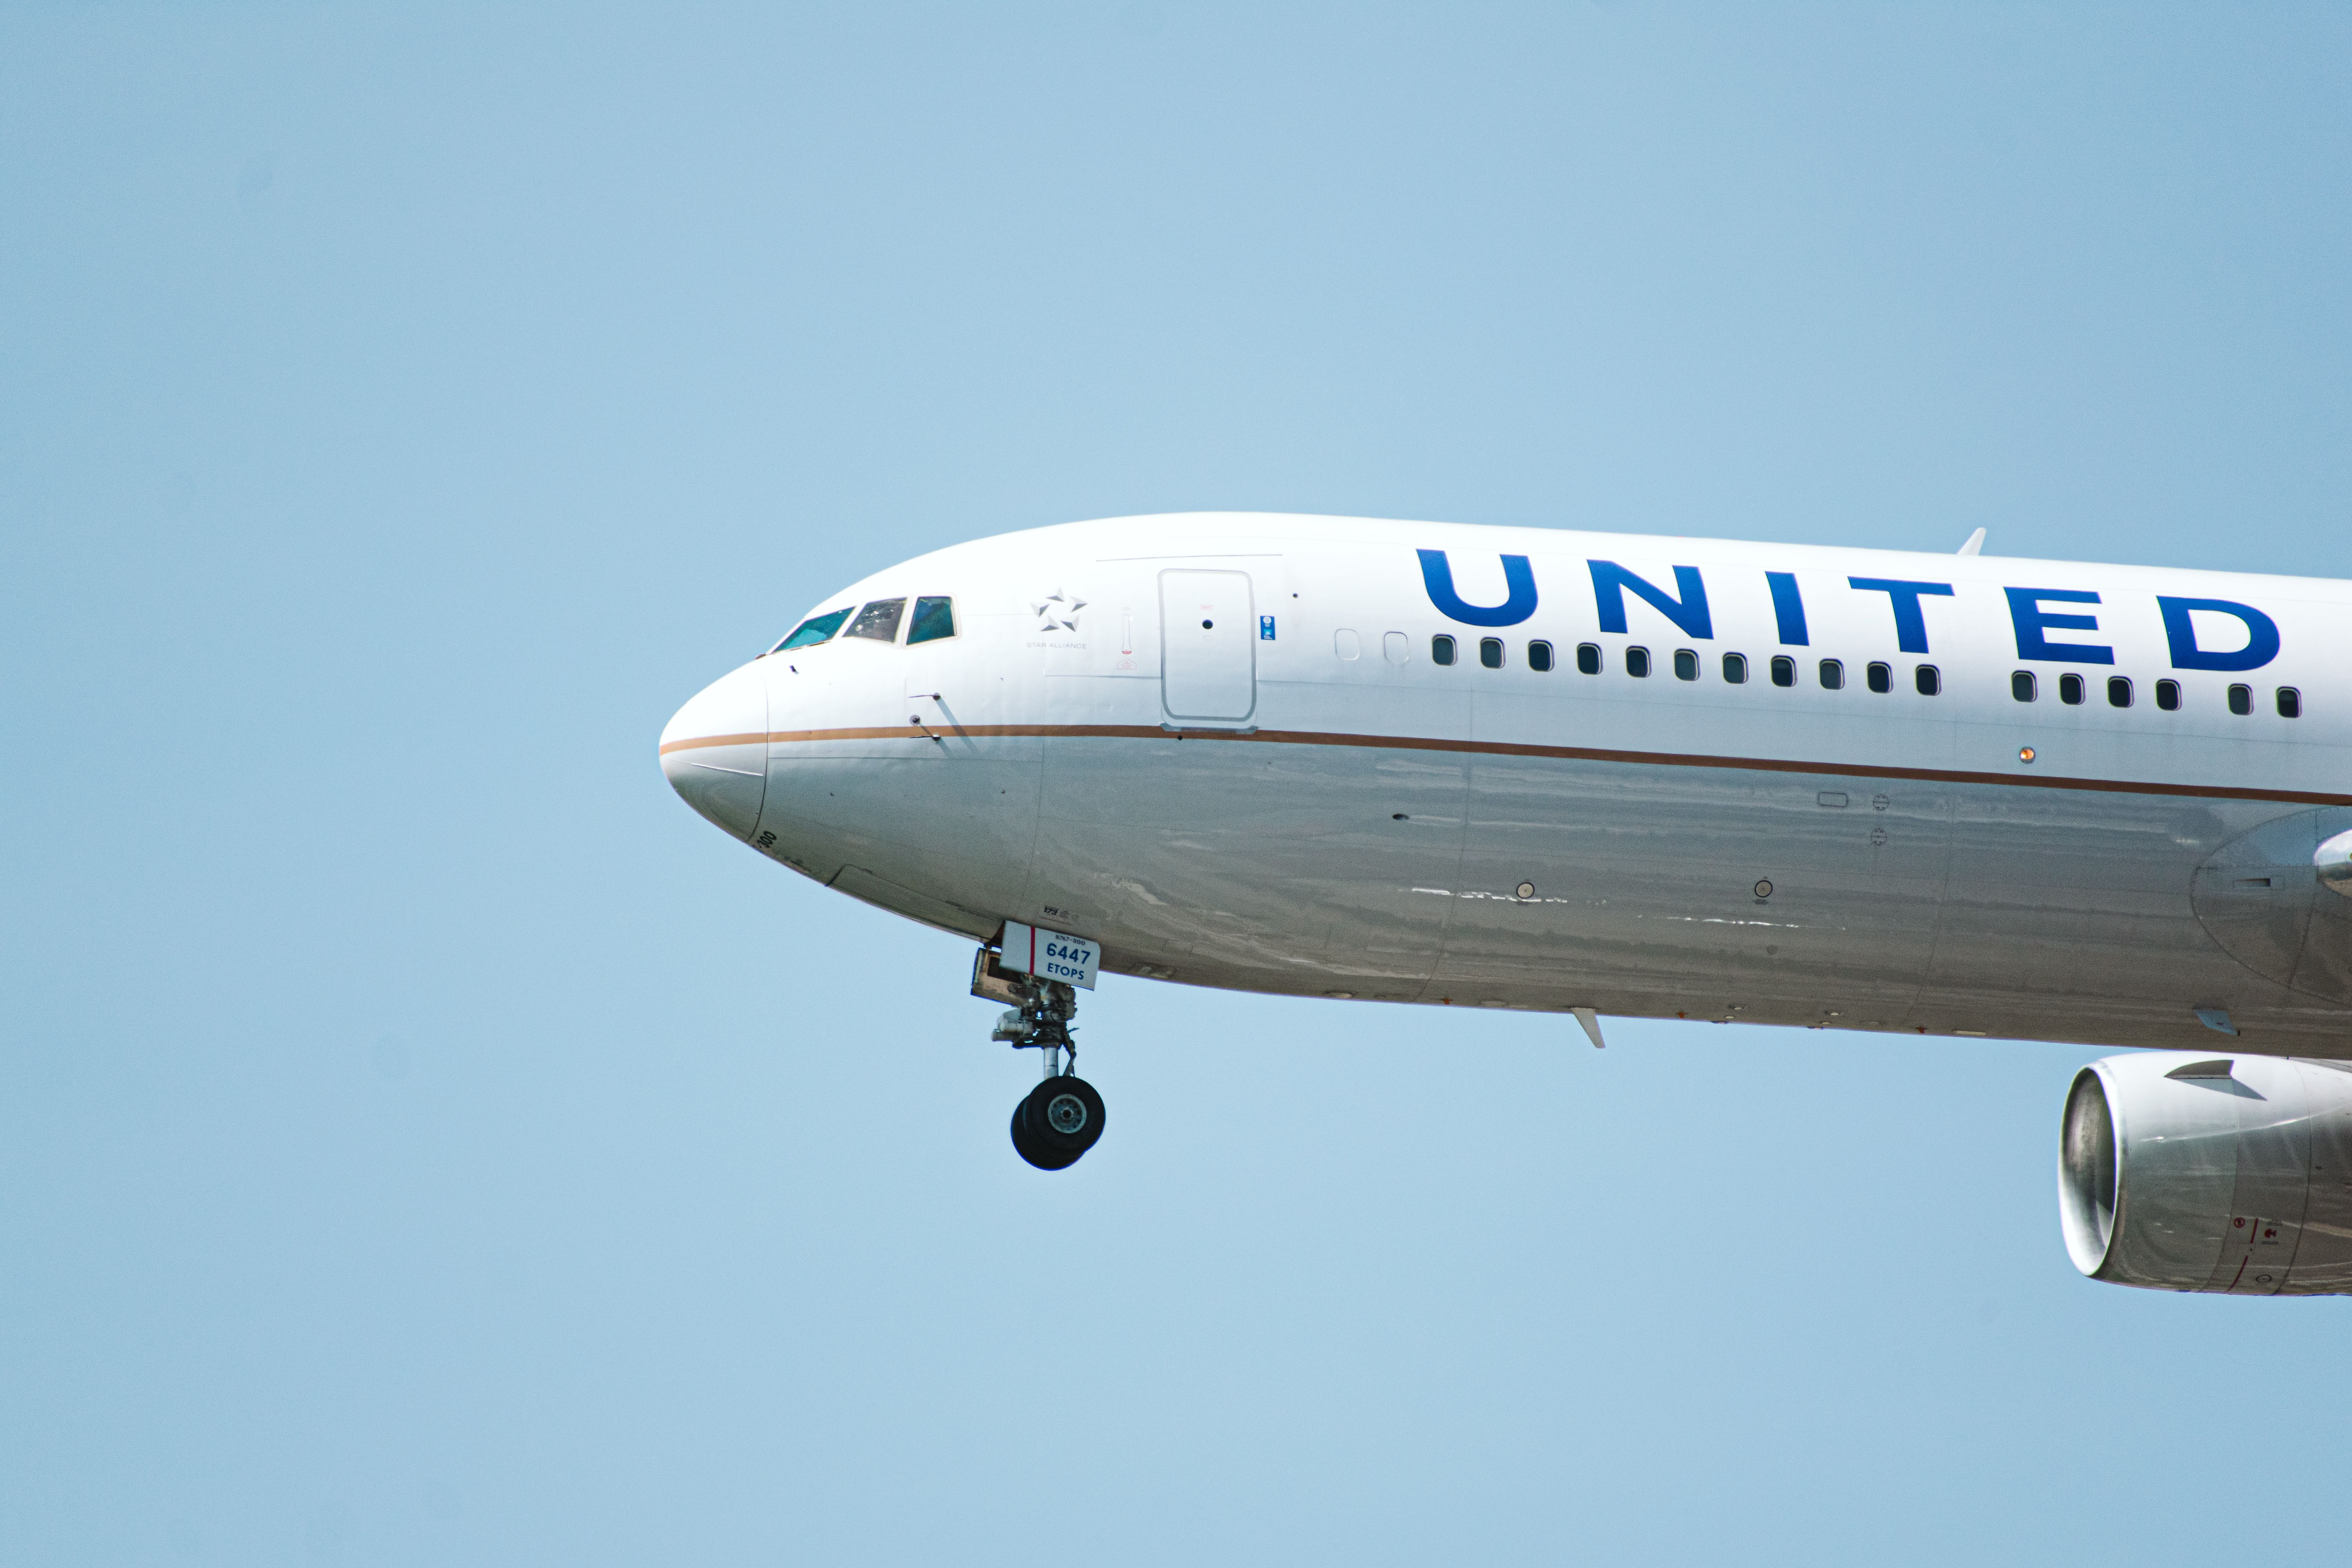 United Boeing 767-300 landing at GRU.